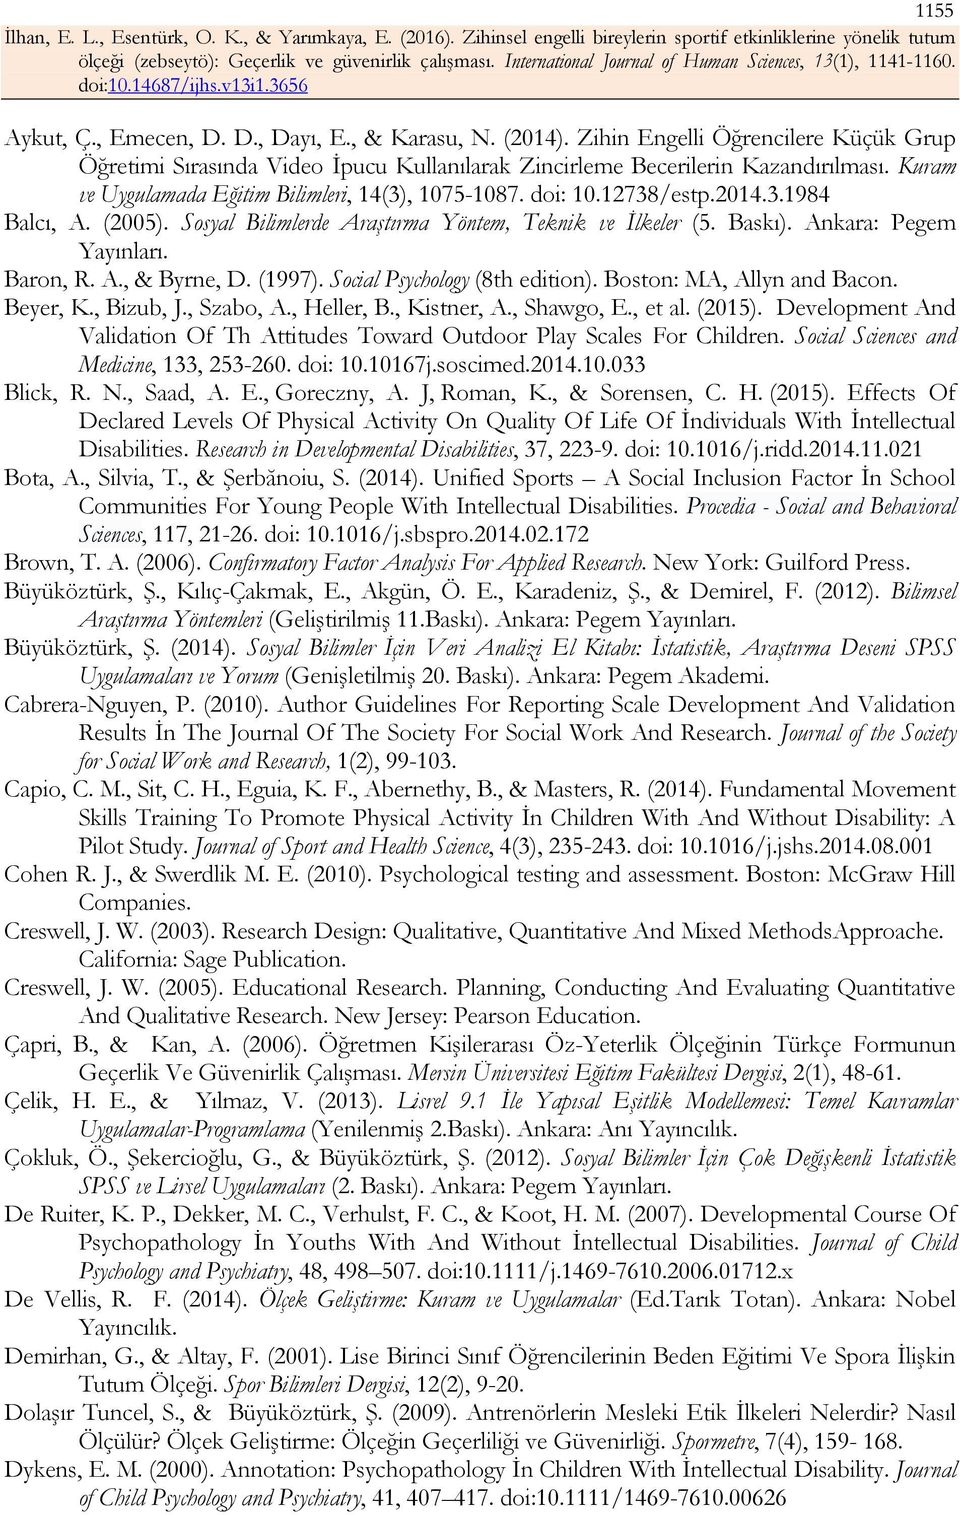 Baron, R. A., & Byrne, D. (1997). Social Psychology (8th edition). Boston: MA, Allyn and Bacon. Beyer, K., Bizub, J., Szabo, A., Heller, B., Kistner, A., Shawgo, E., et al. (2015).